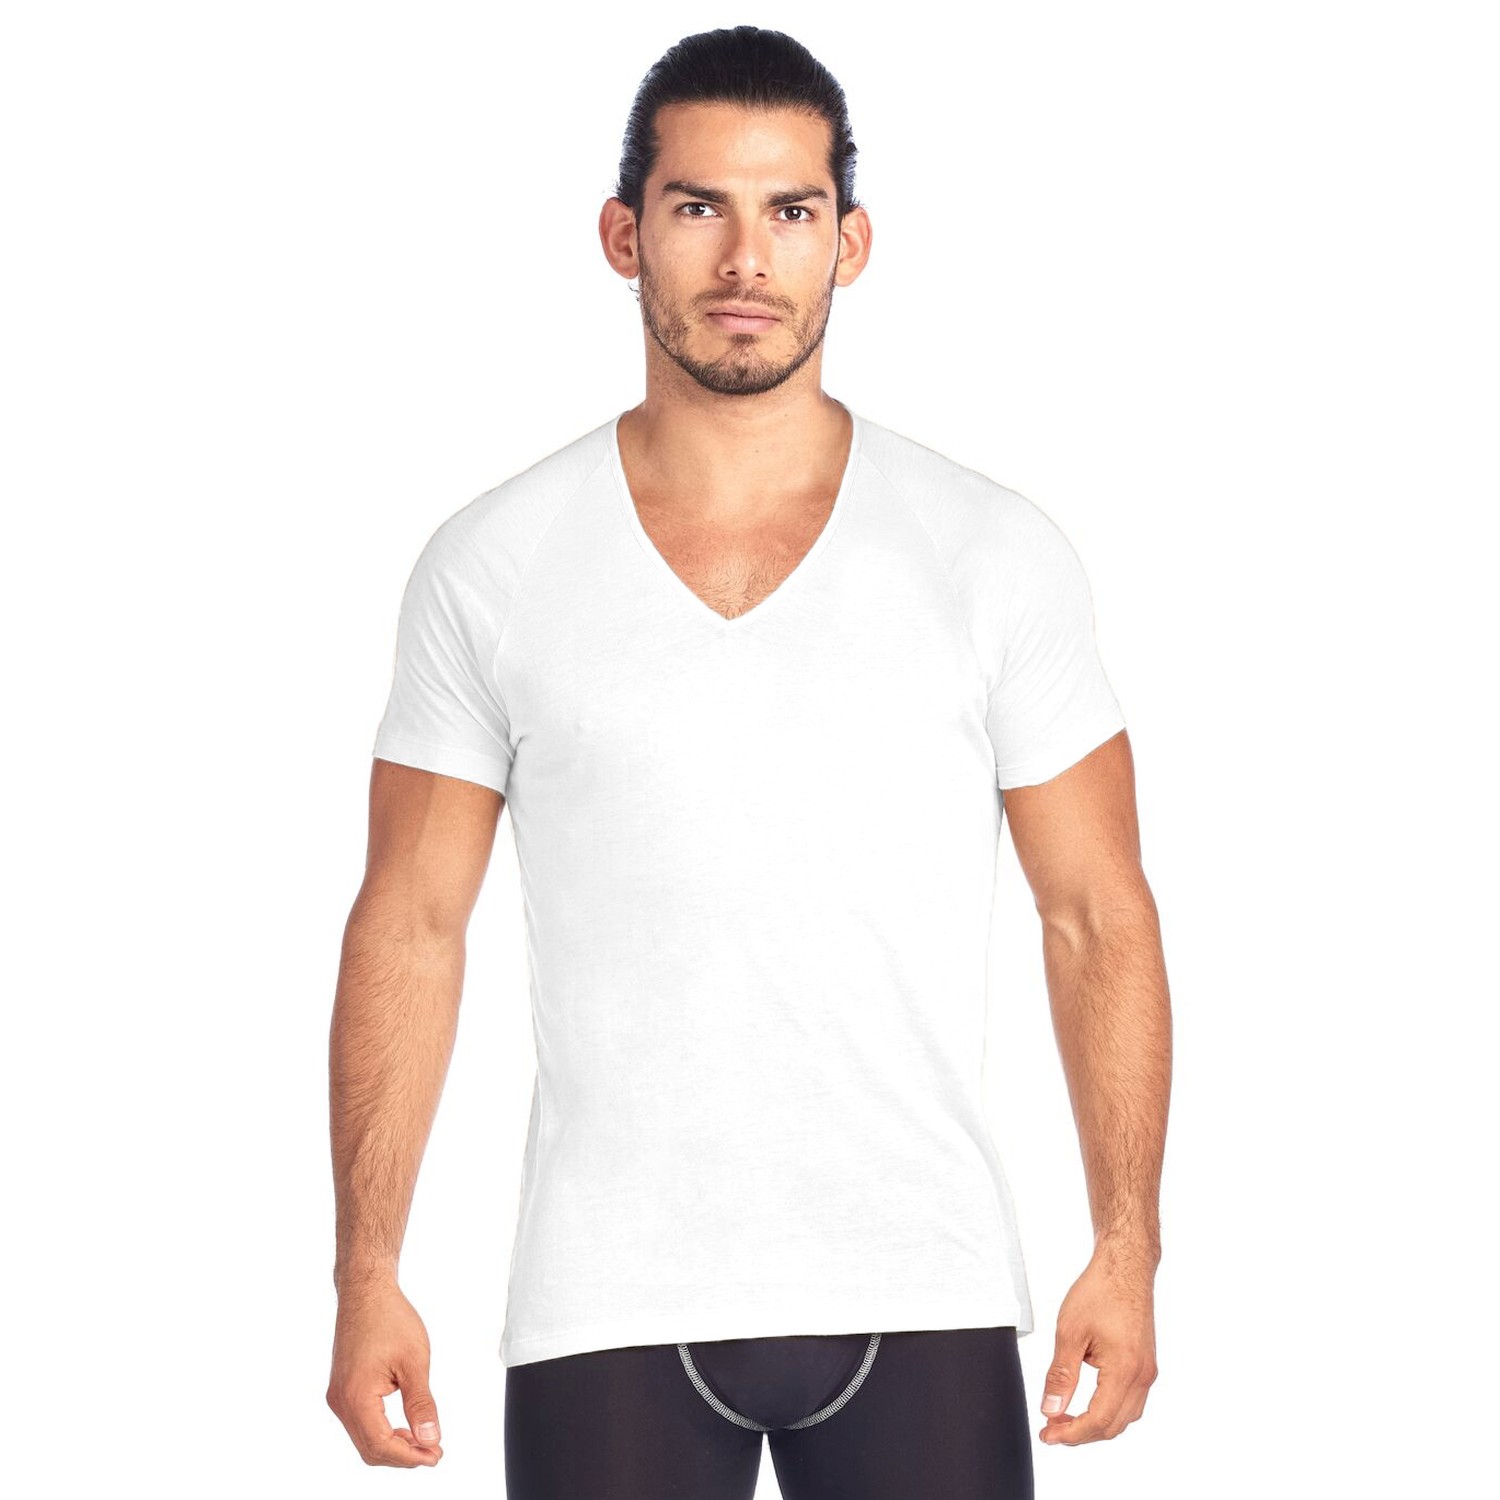 Shirtless Deep V Neck Undershirt White Shirtless Undershirts